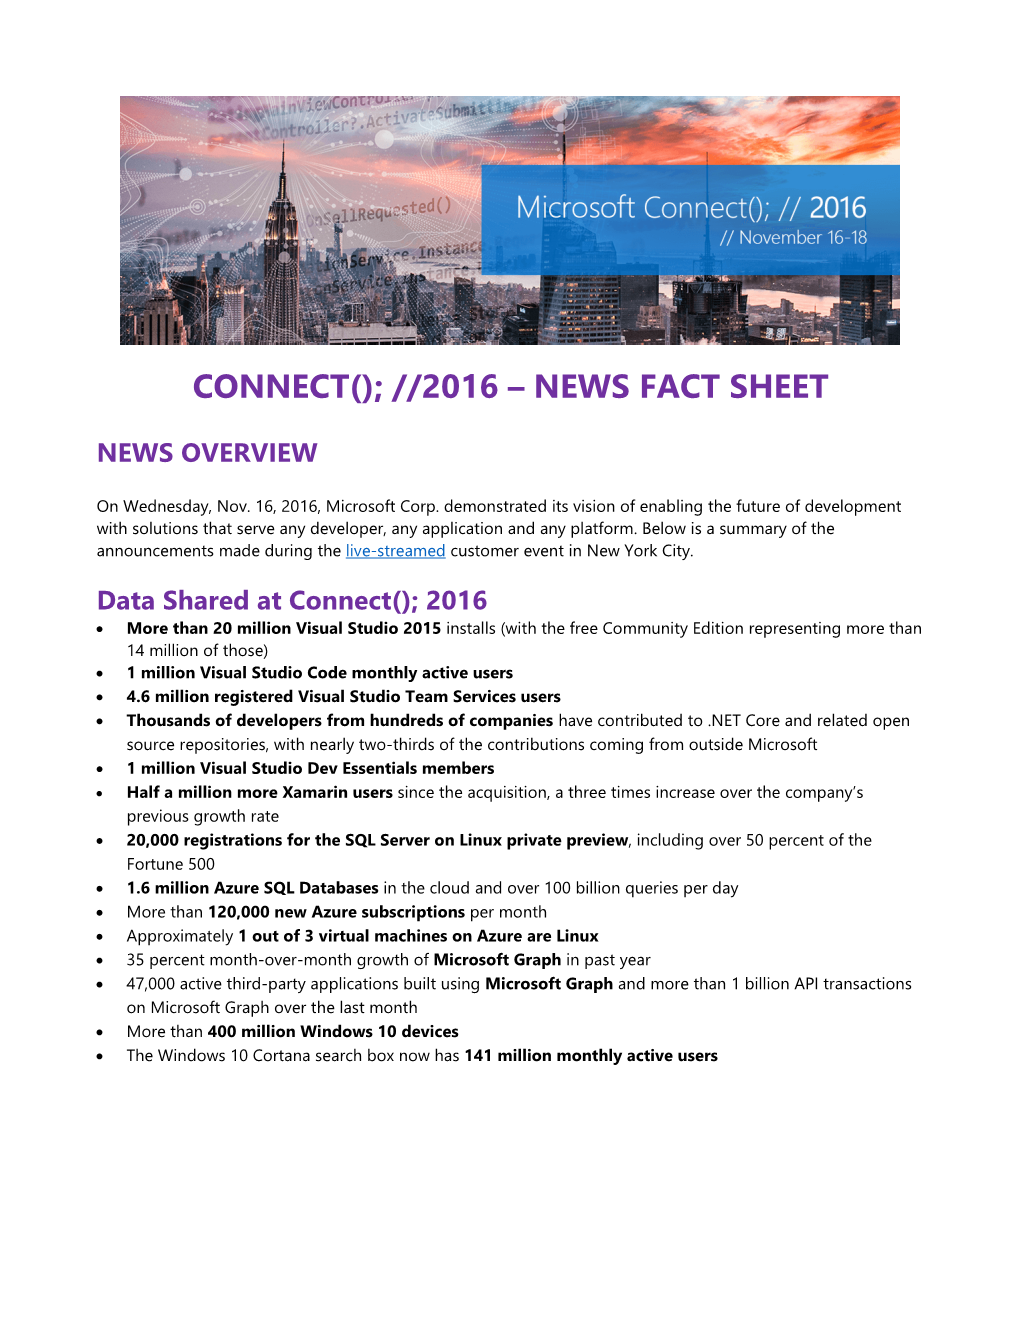 Microsoft Connect 2016 Fact Sheet